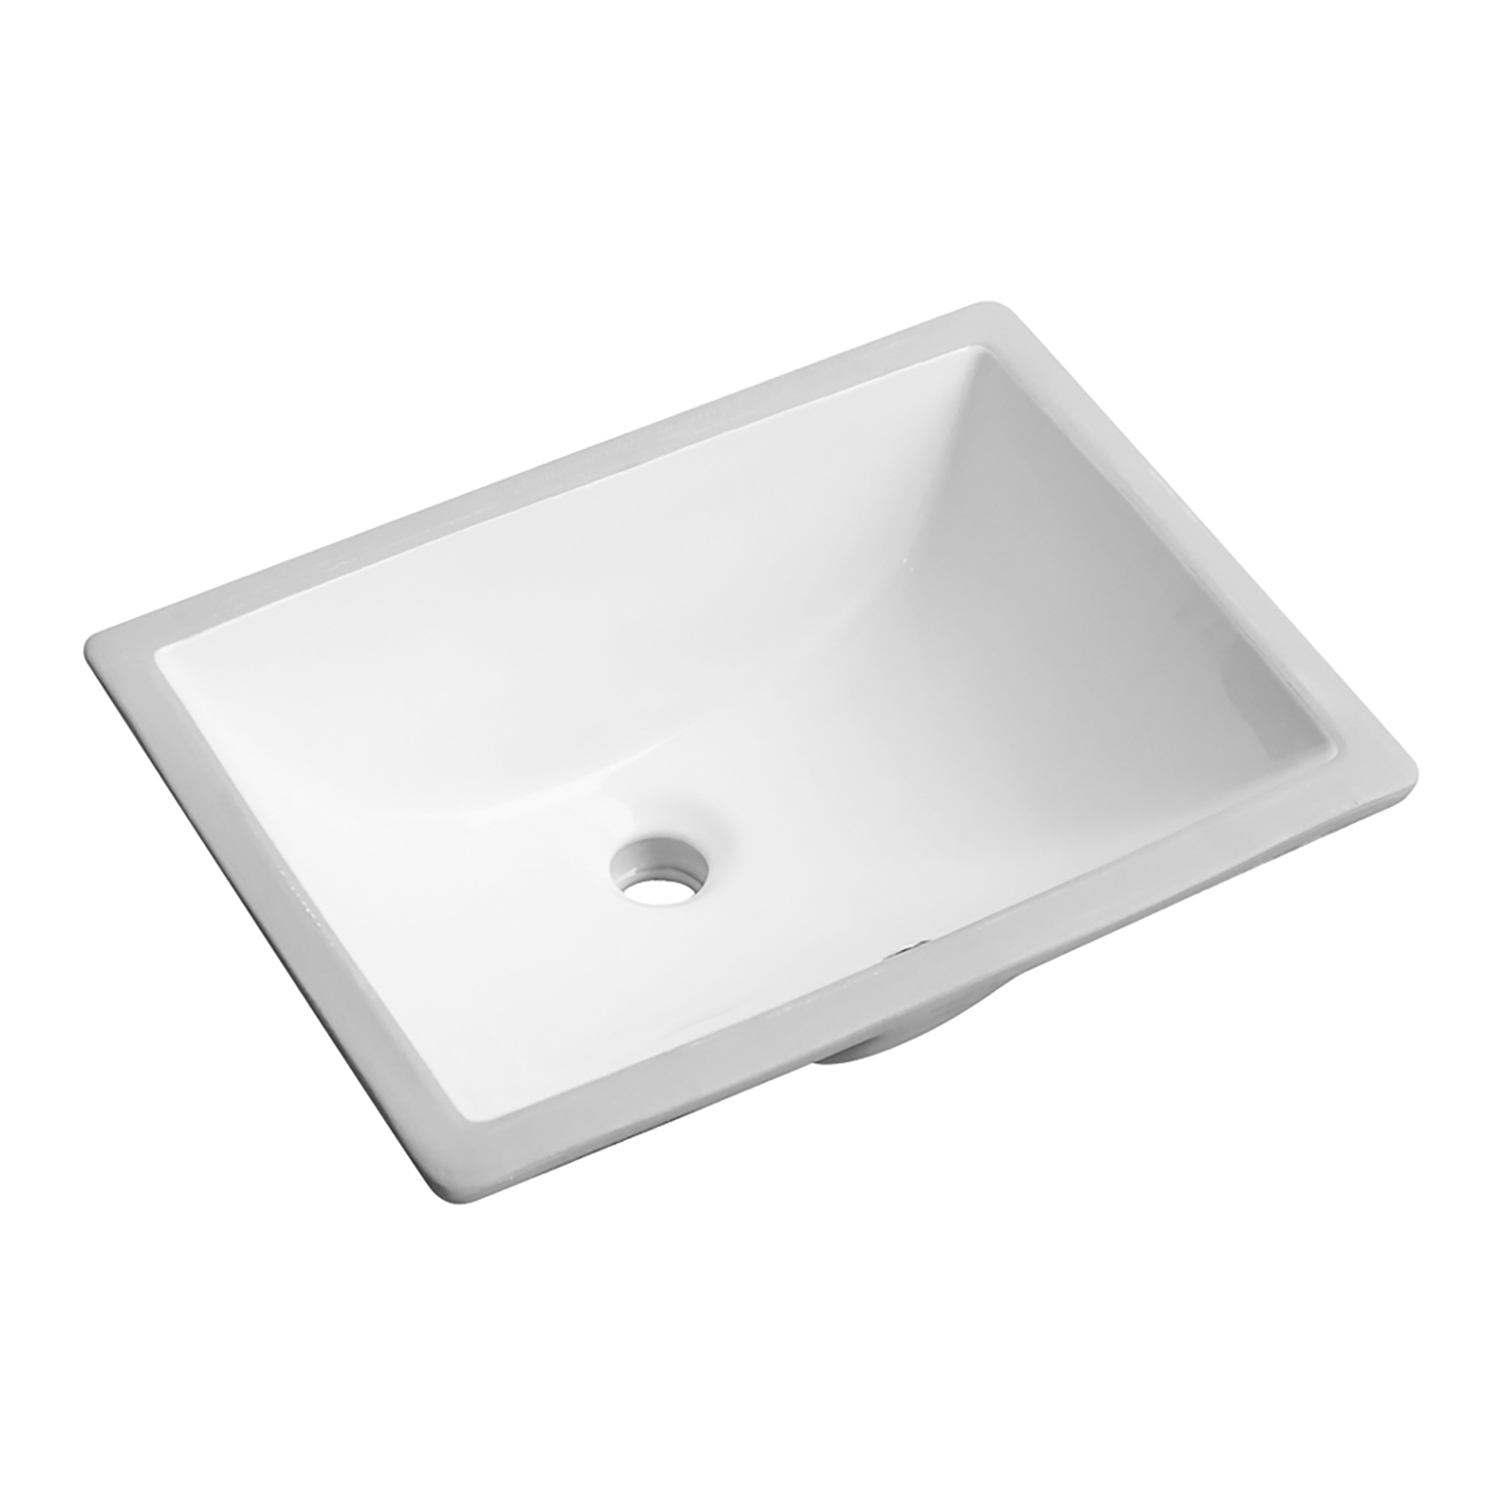 Duko C2018 18" x 13" White Square Ceramic Undermount Bathroom Vanity Vessel Sink